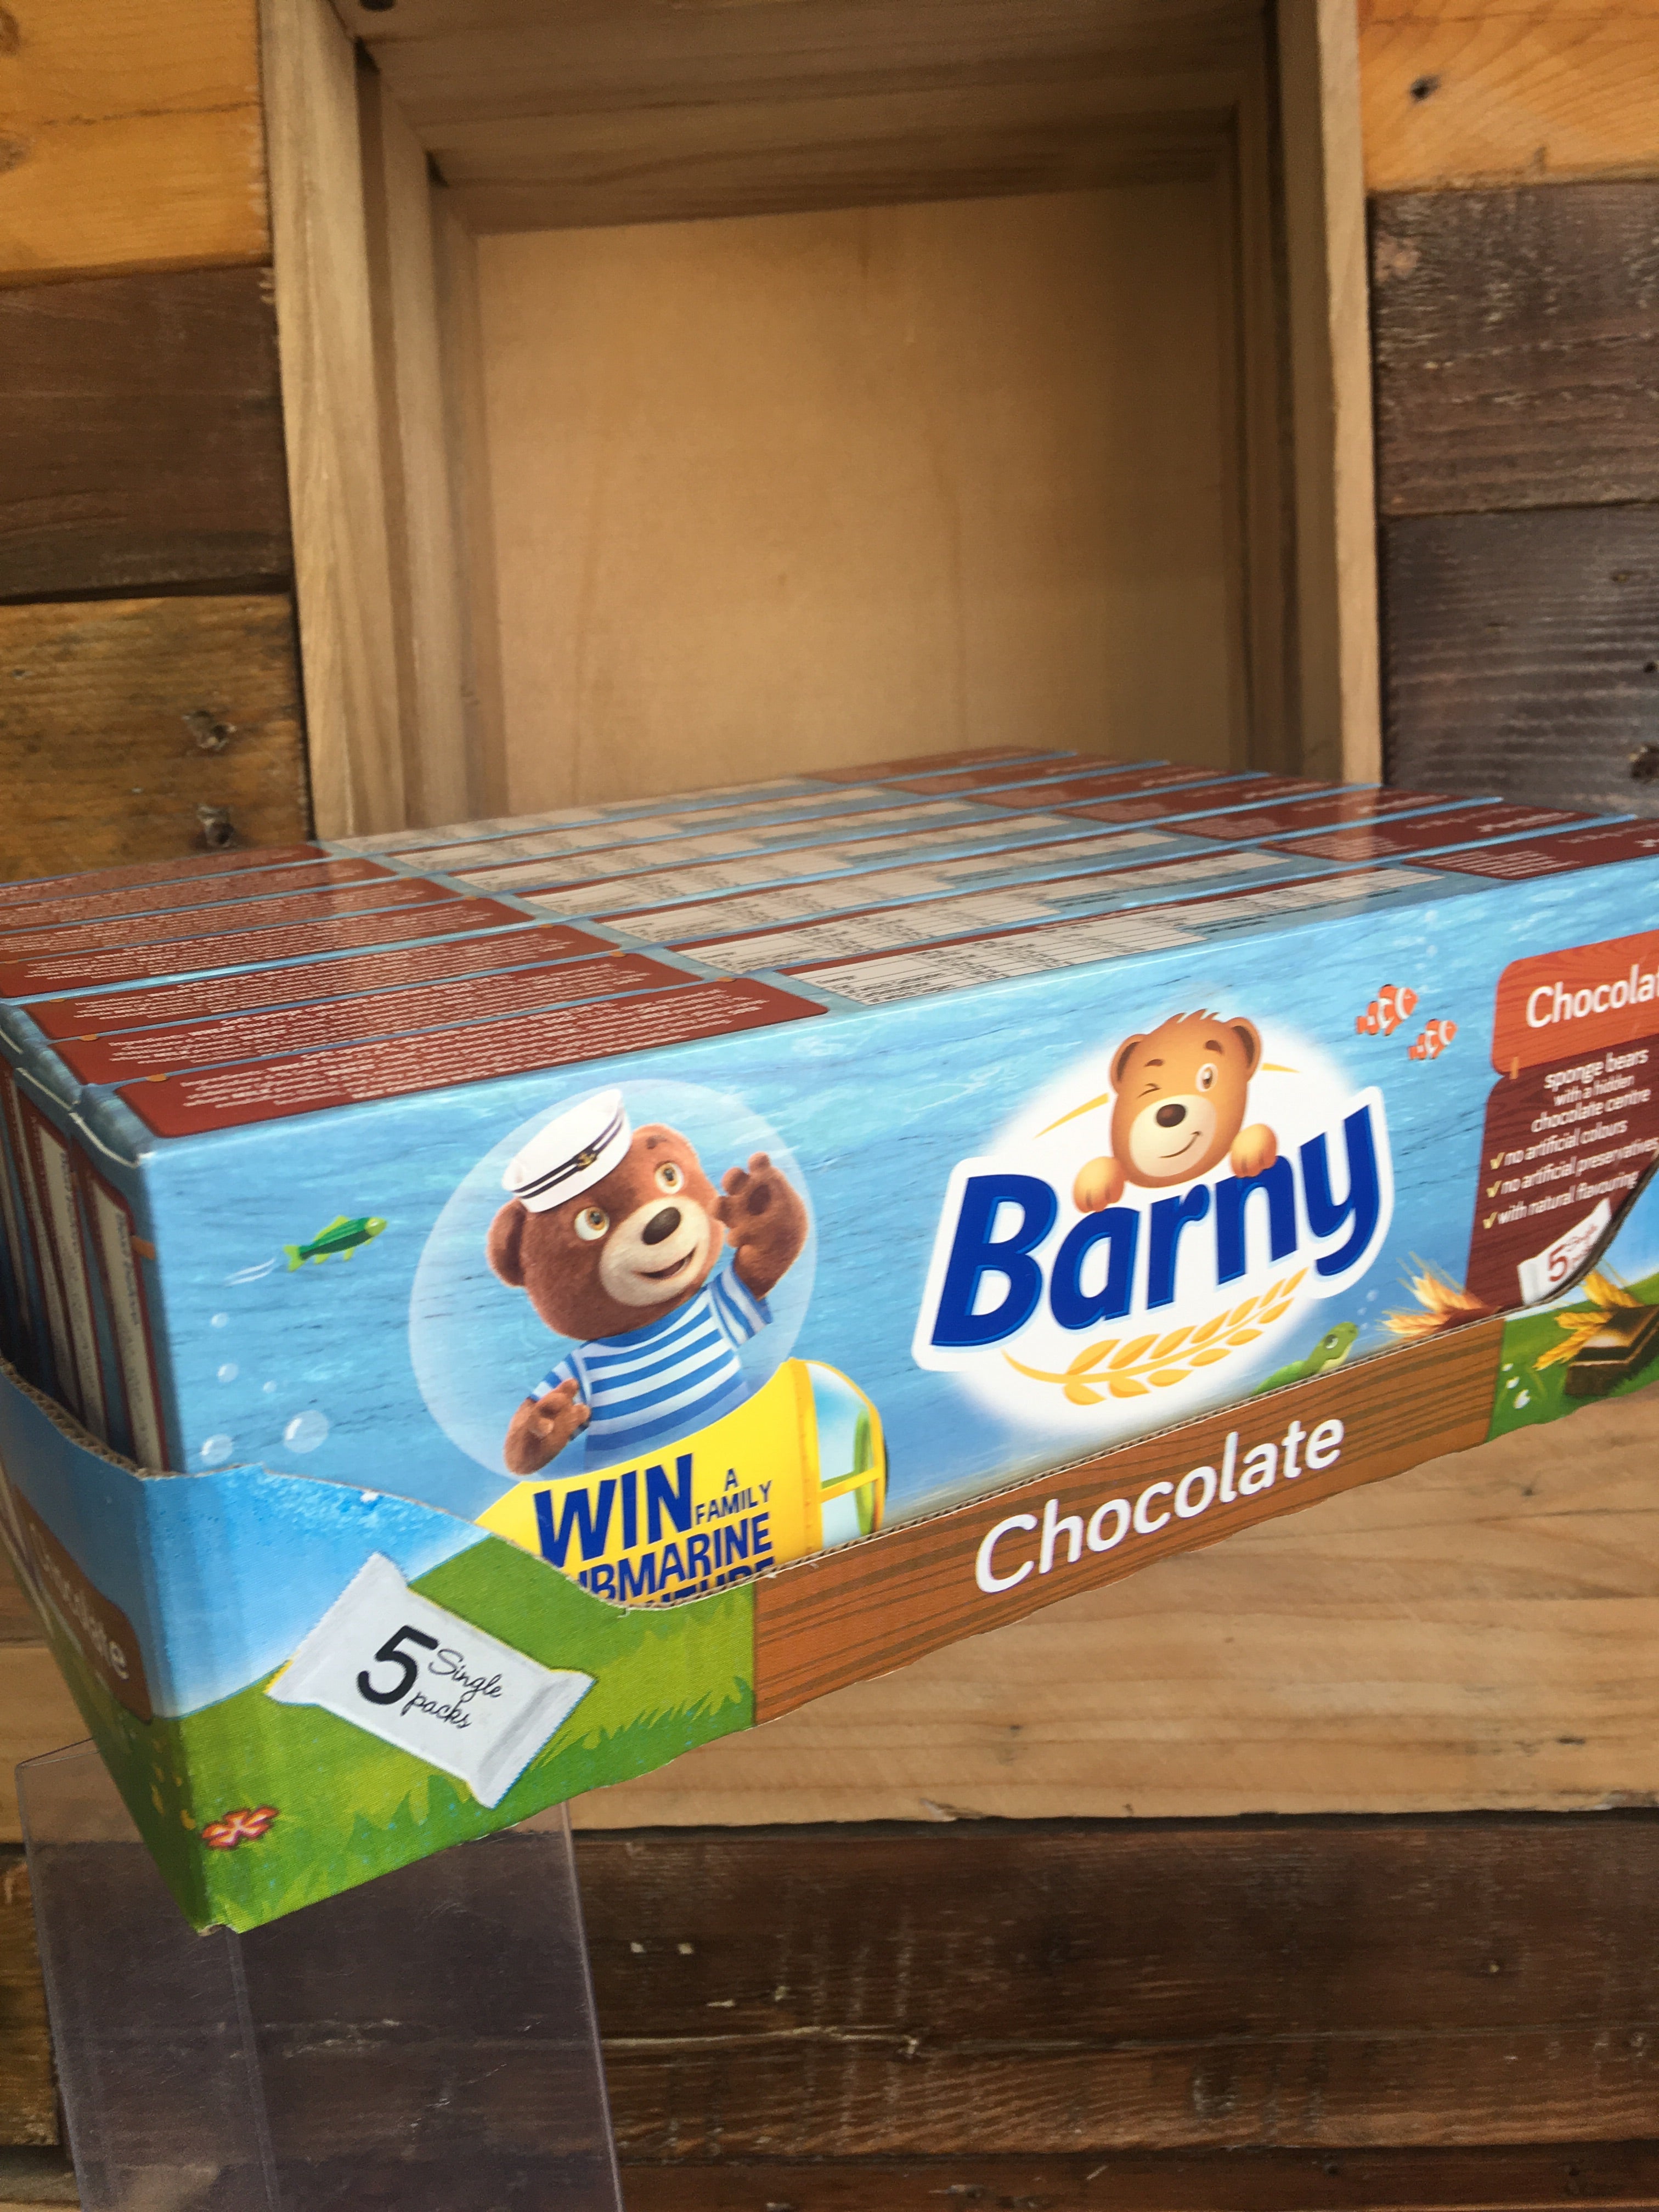 Cake Bear cub Barney Chocolate 150g – Baltic Supermart